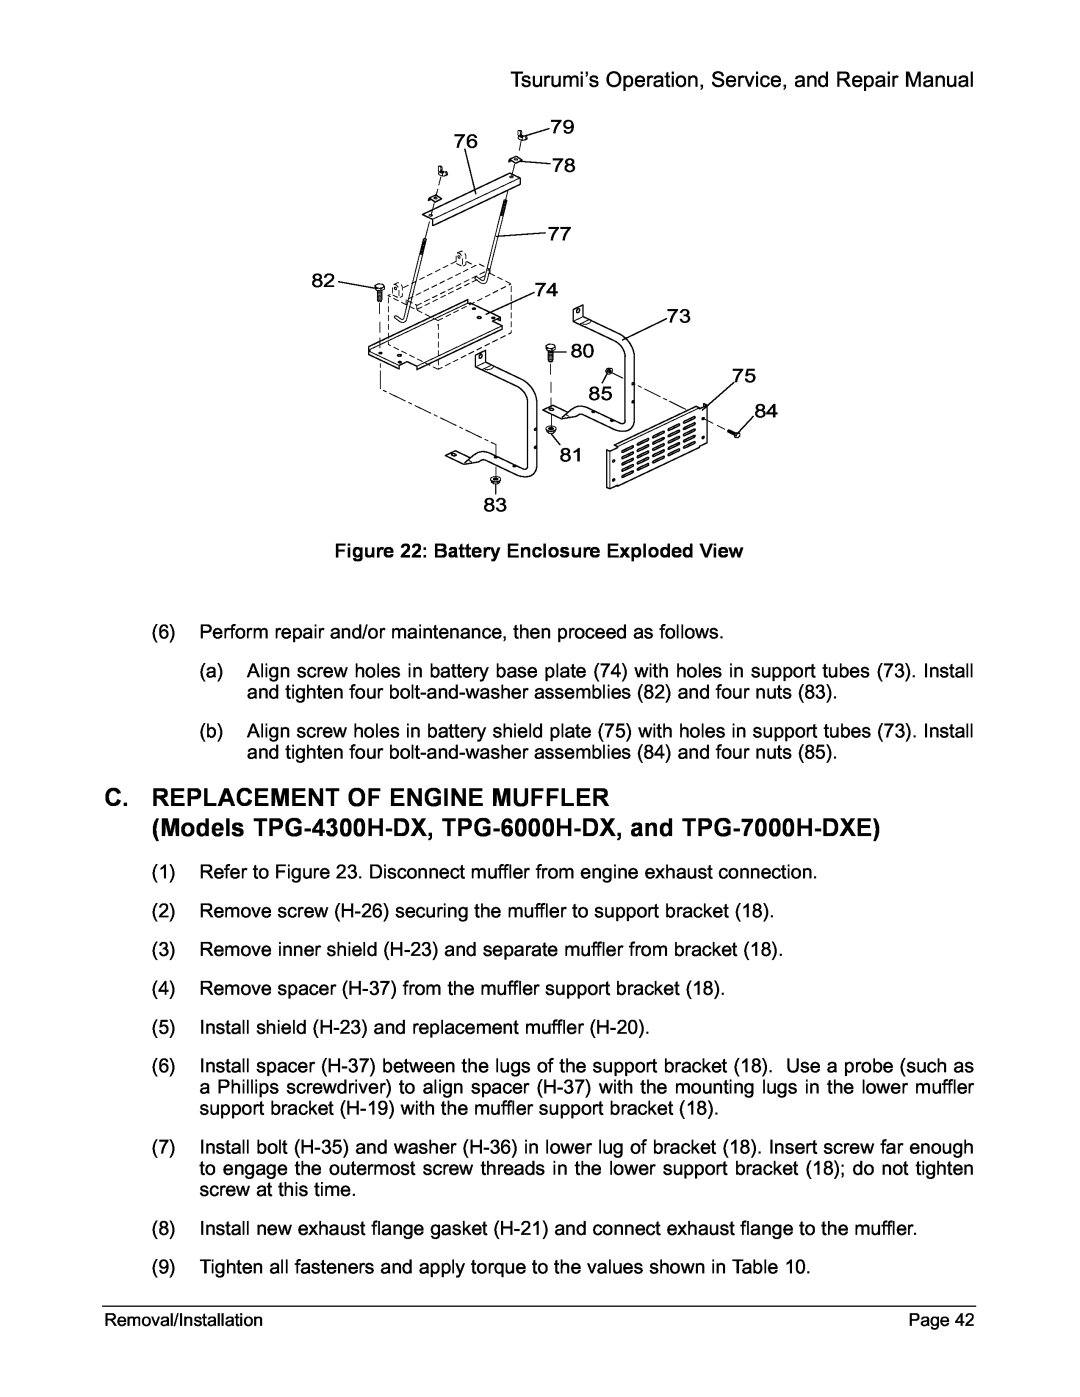 Honda Power Equipment TPG-7000H-DXE manual C.Replacement Of Engine Muffler, Tsurumi’s Operation, Service, and Repair Manual 